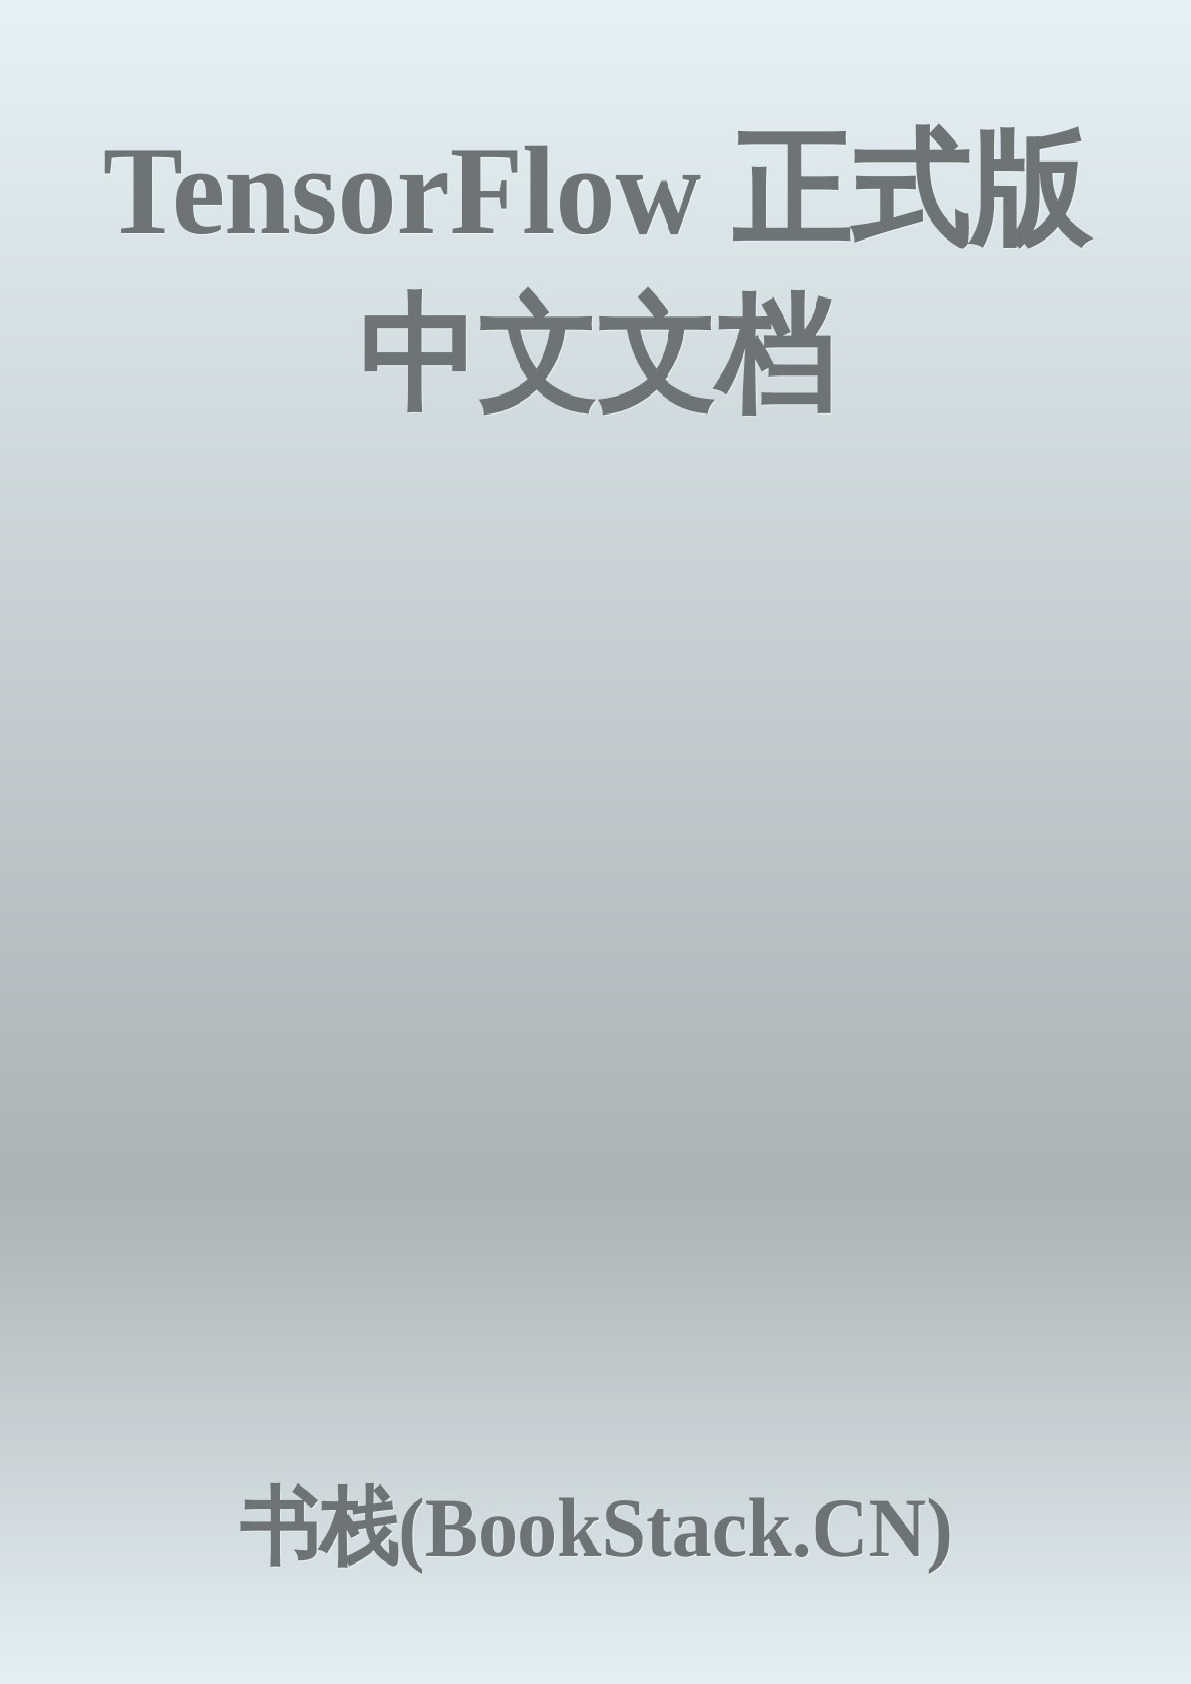 TensorFlow正式版中文文档